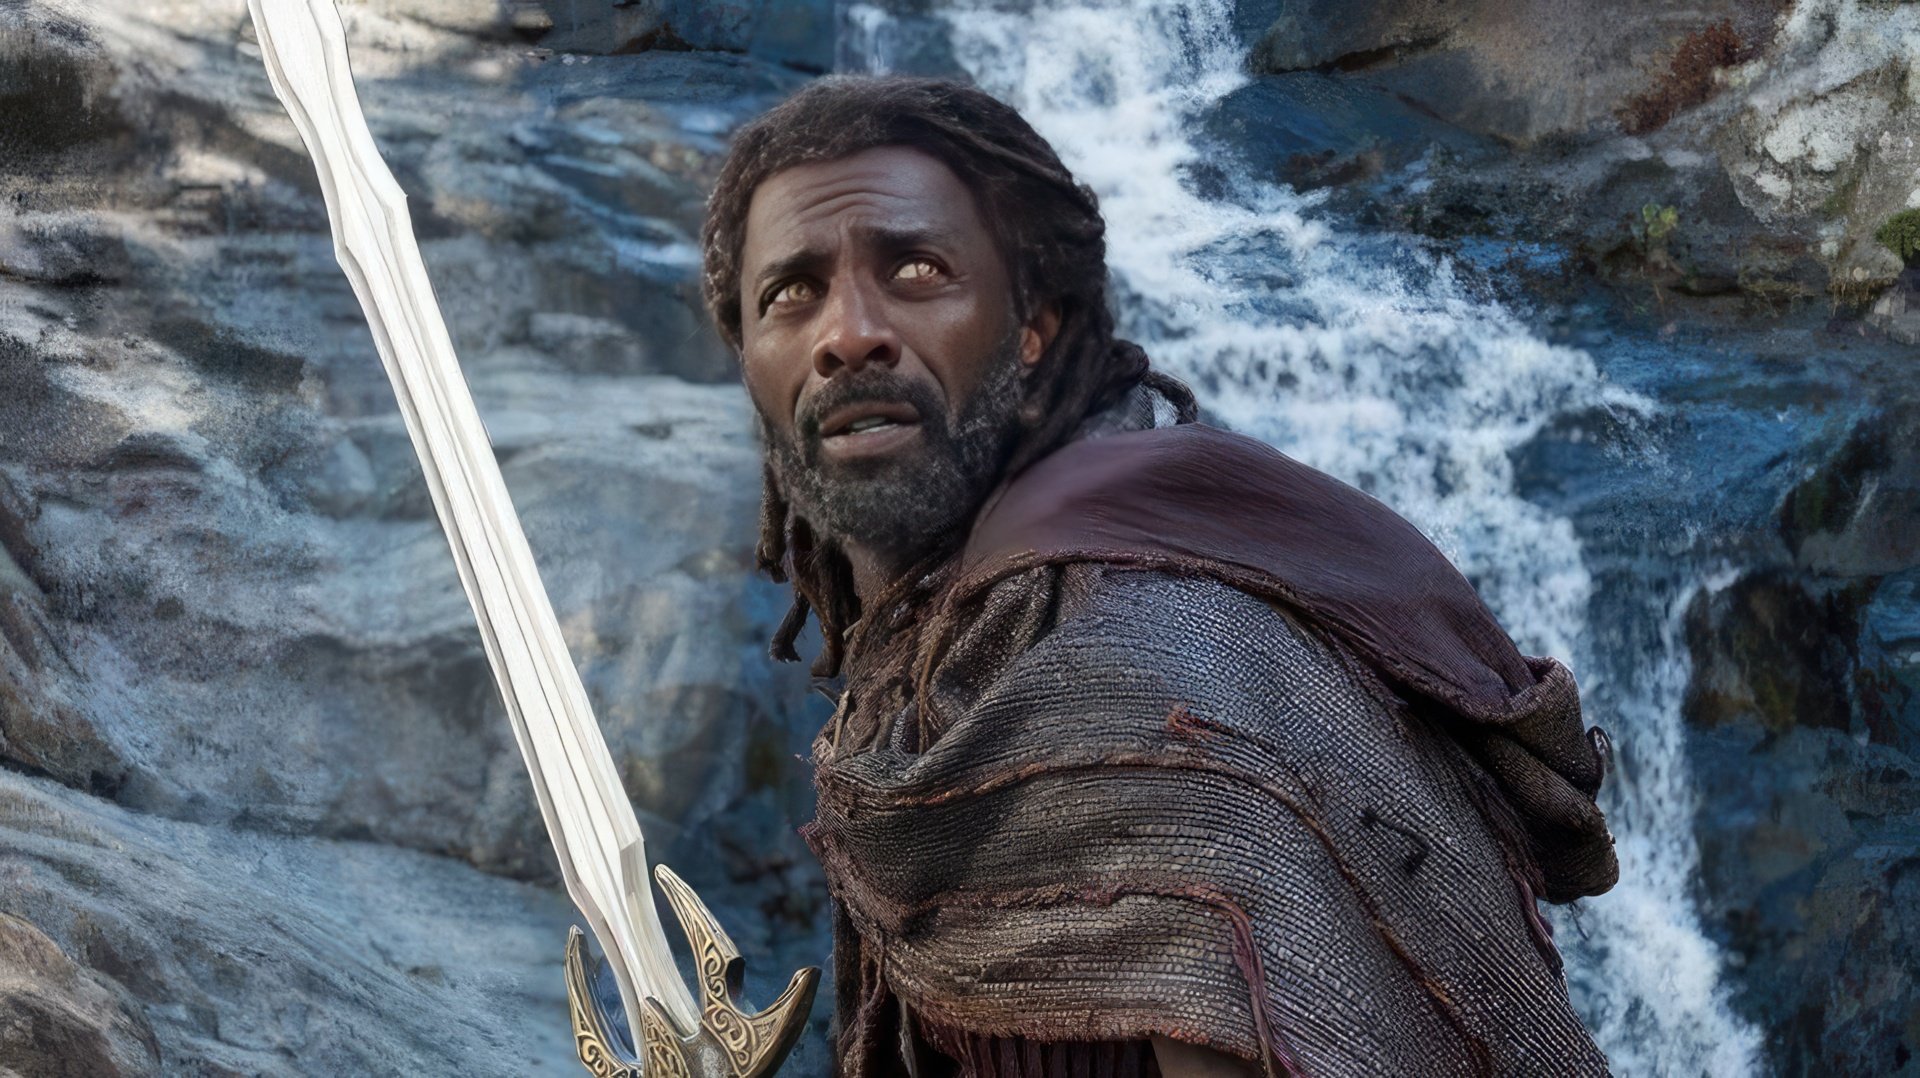 Idris Elba in Thor’s franchise